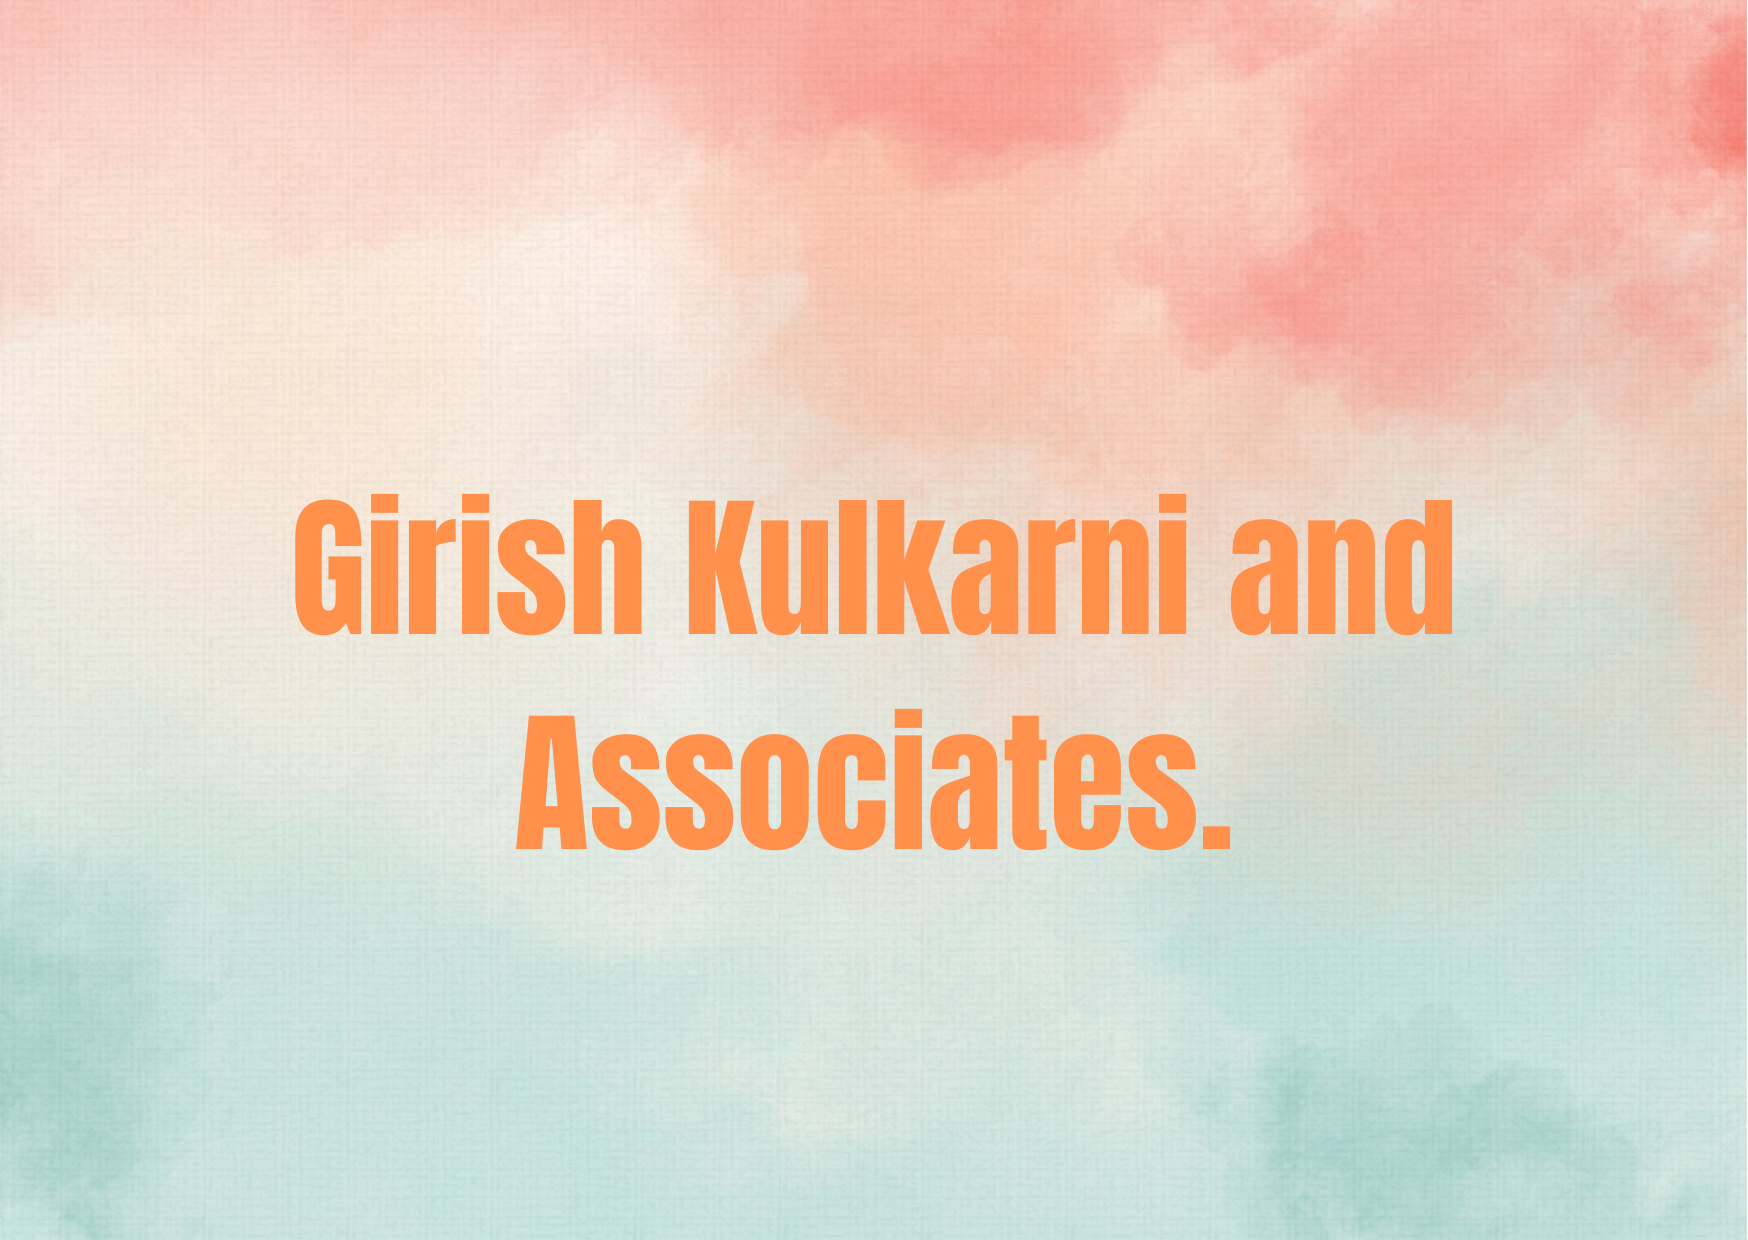 Girish Kulkarni and Associates,   